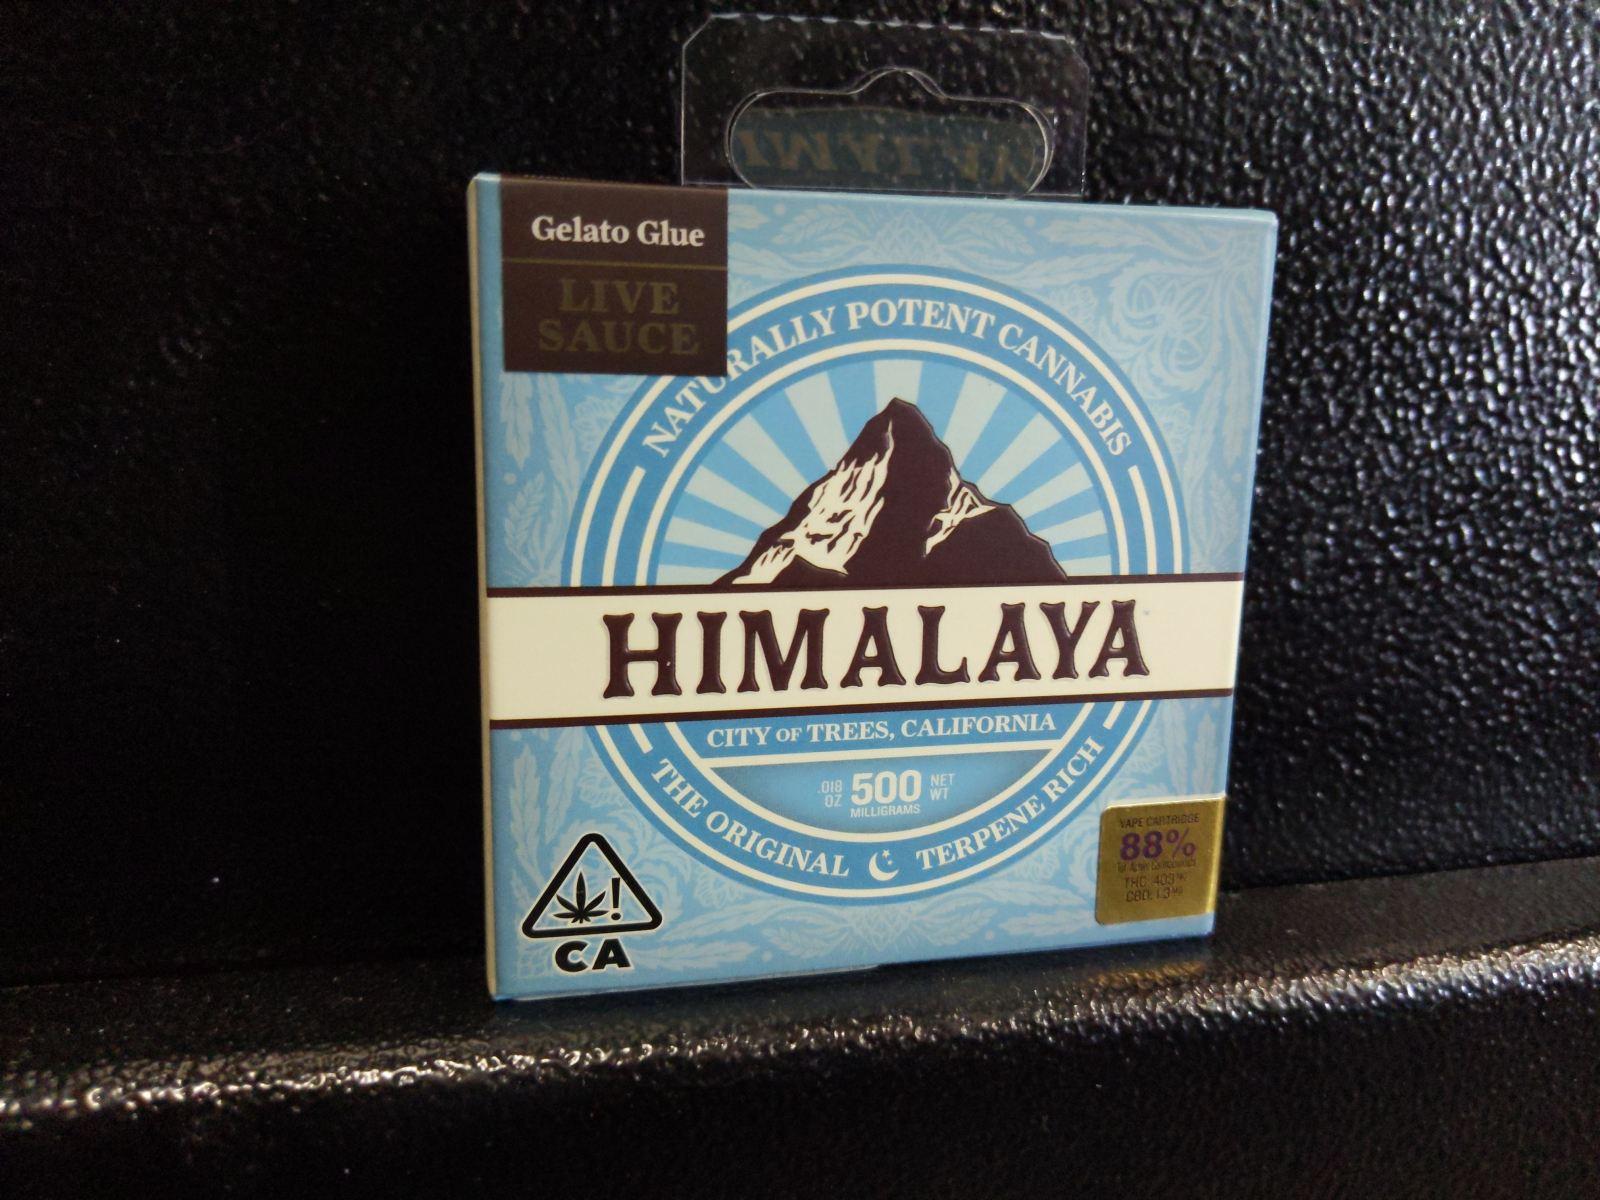 Himalaya .5g Cartridge:Indica Dom (live Sauce)- Gelato Glue 